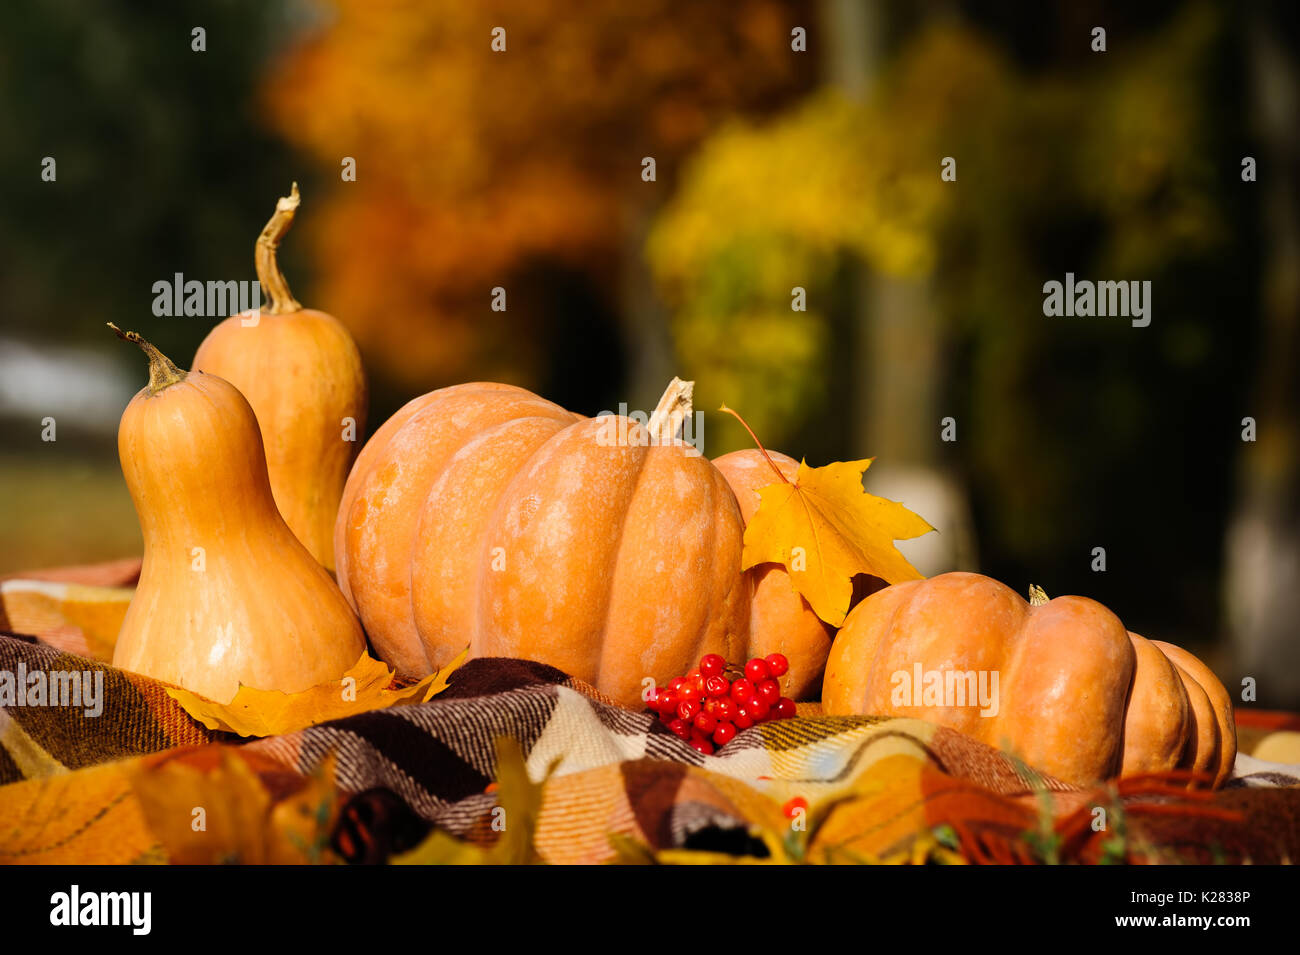 Autumn thanksgiving still life with pumpkins Stock Photo